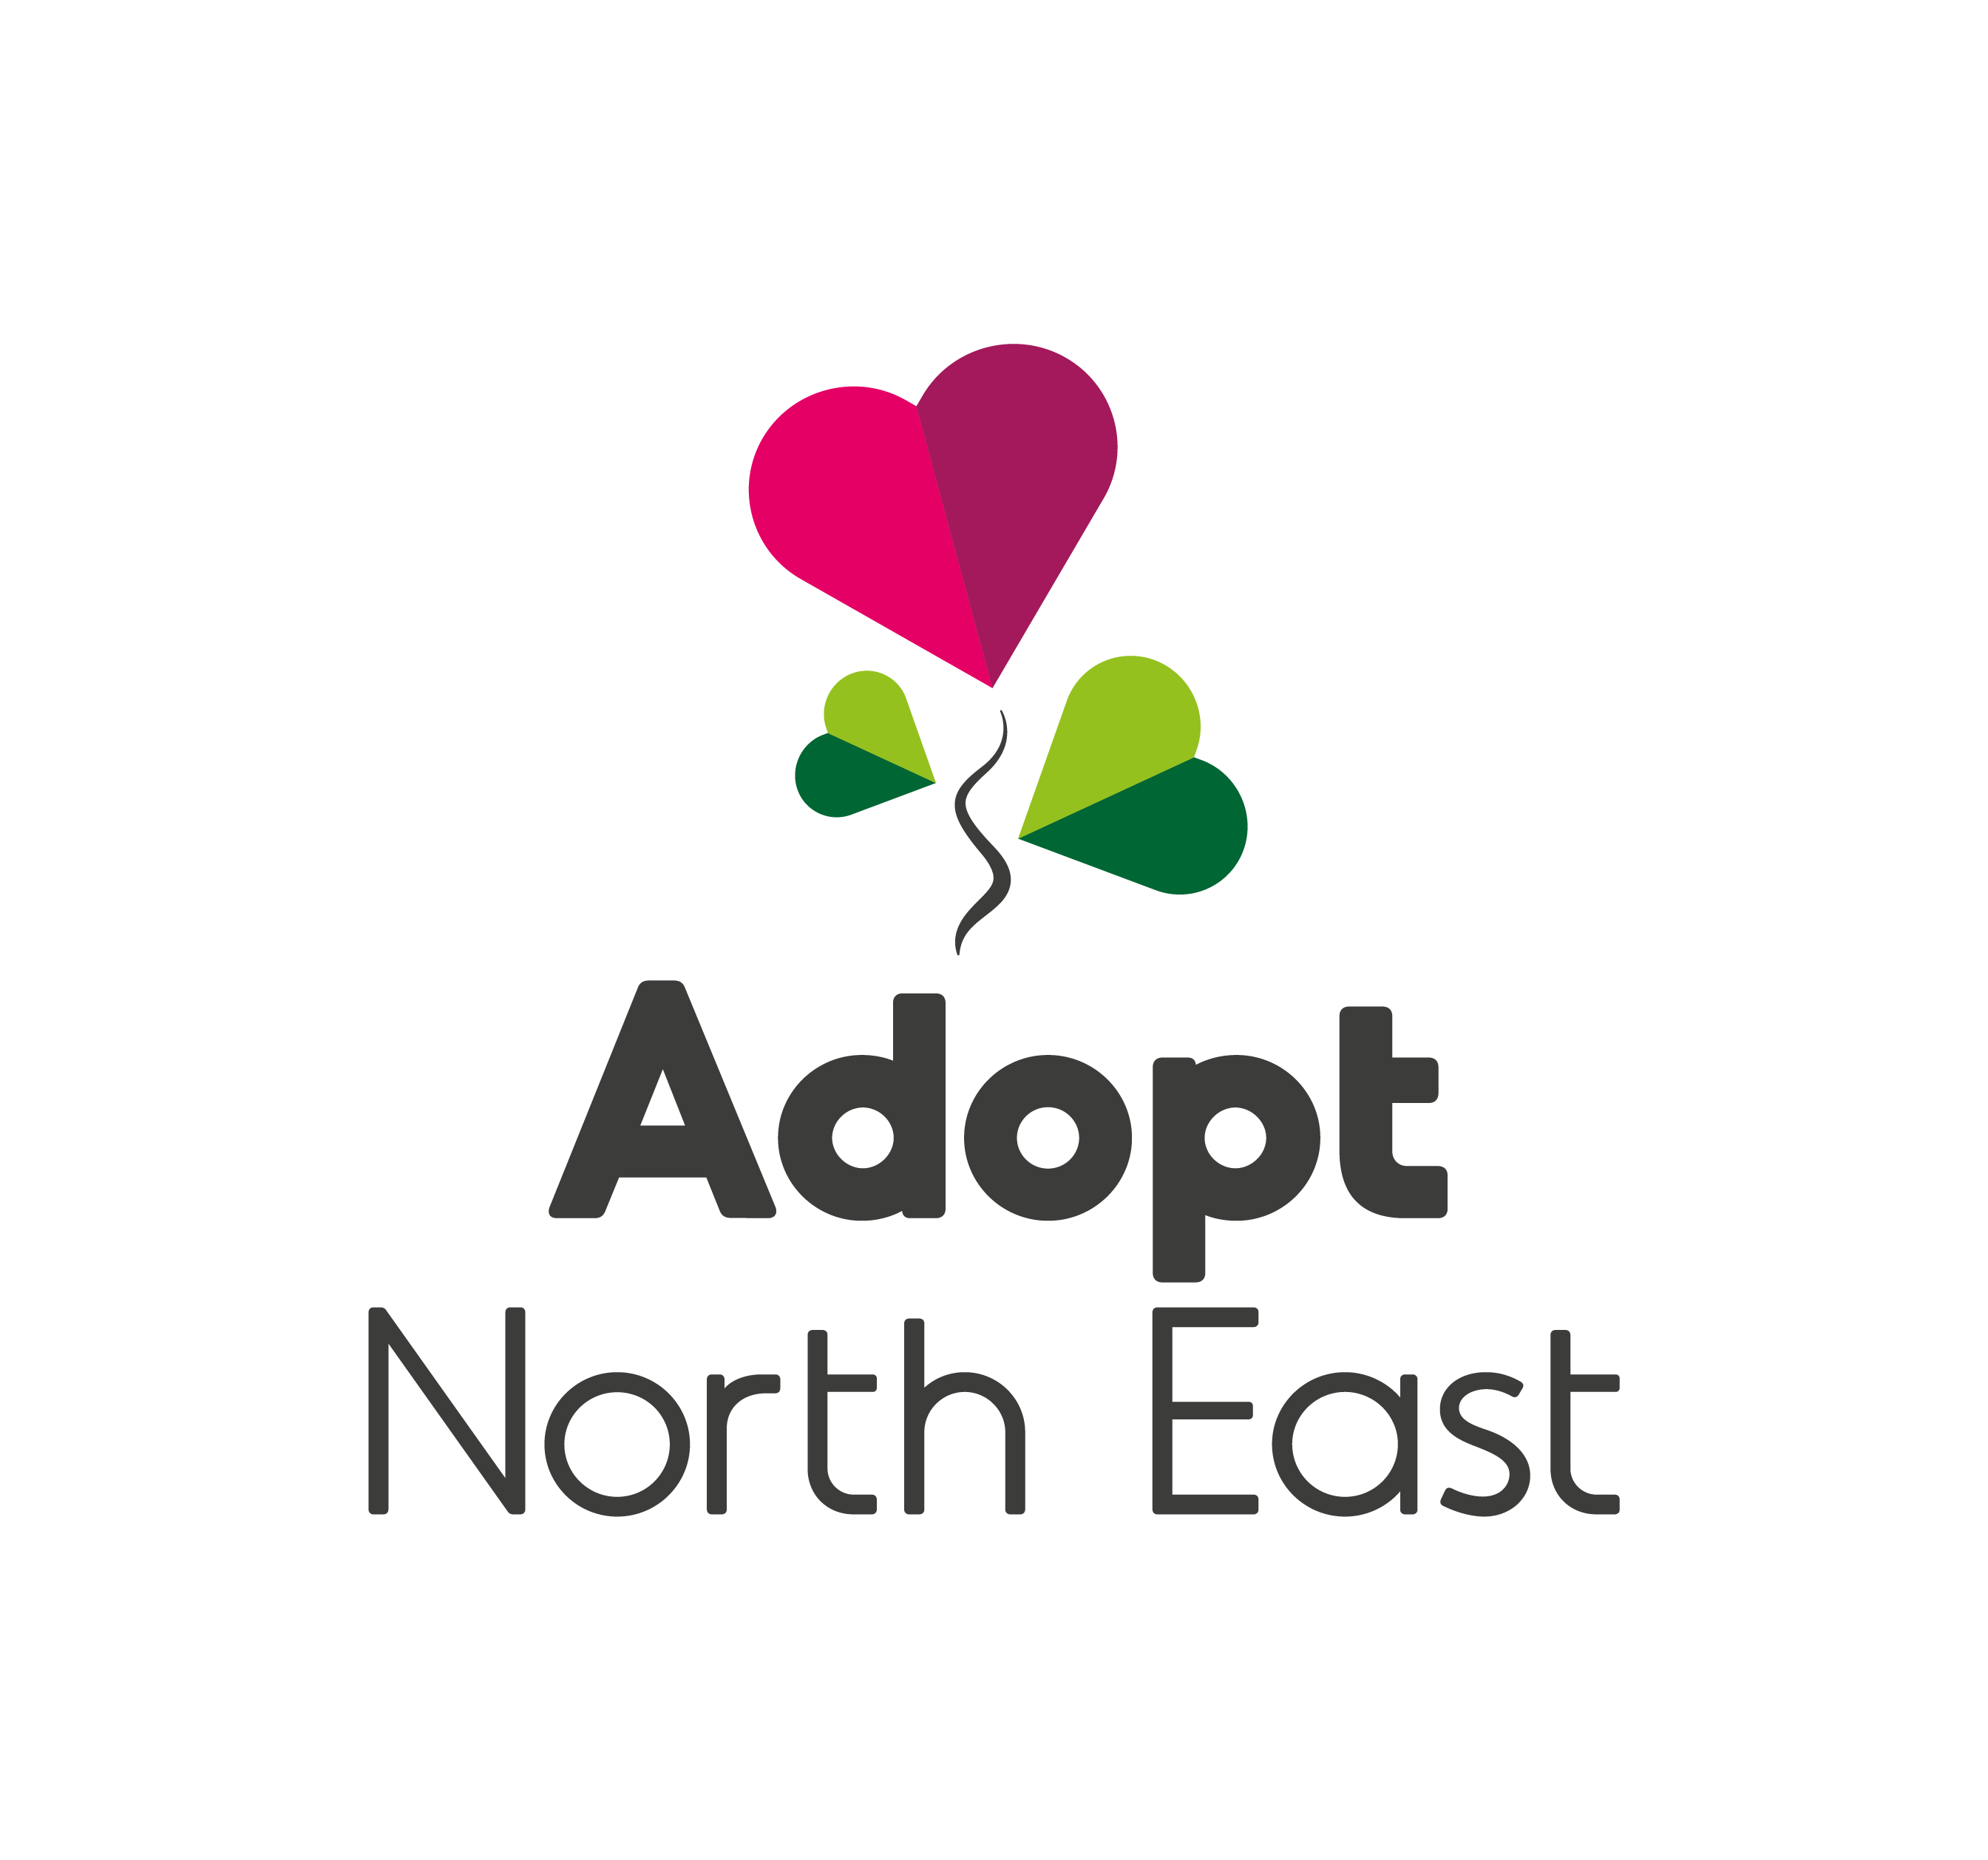 Adopt North East logo